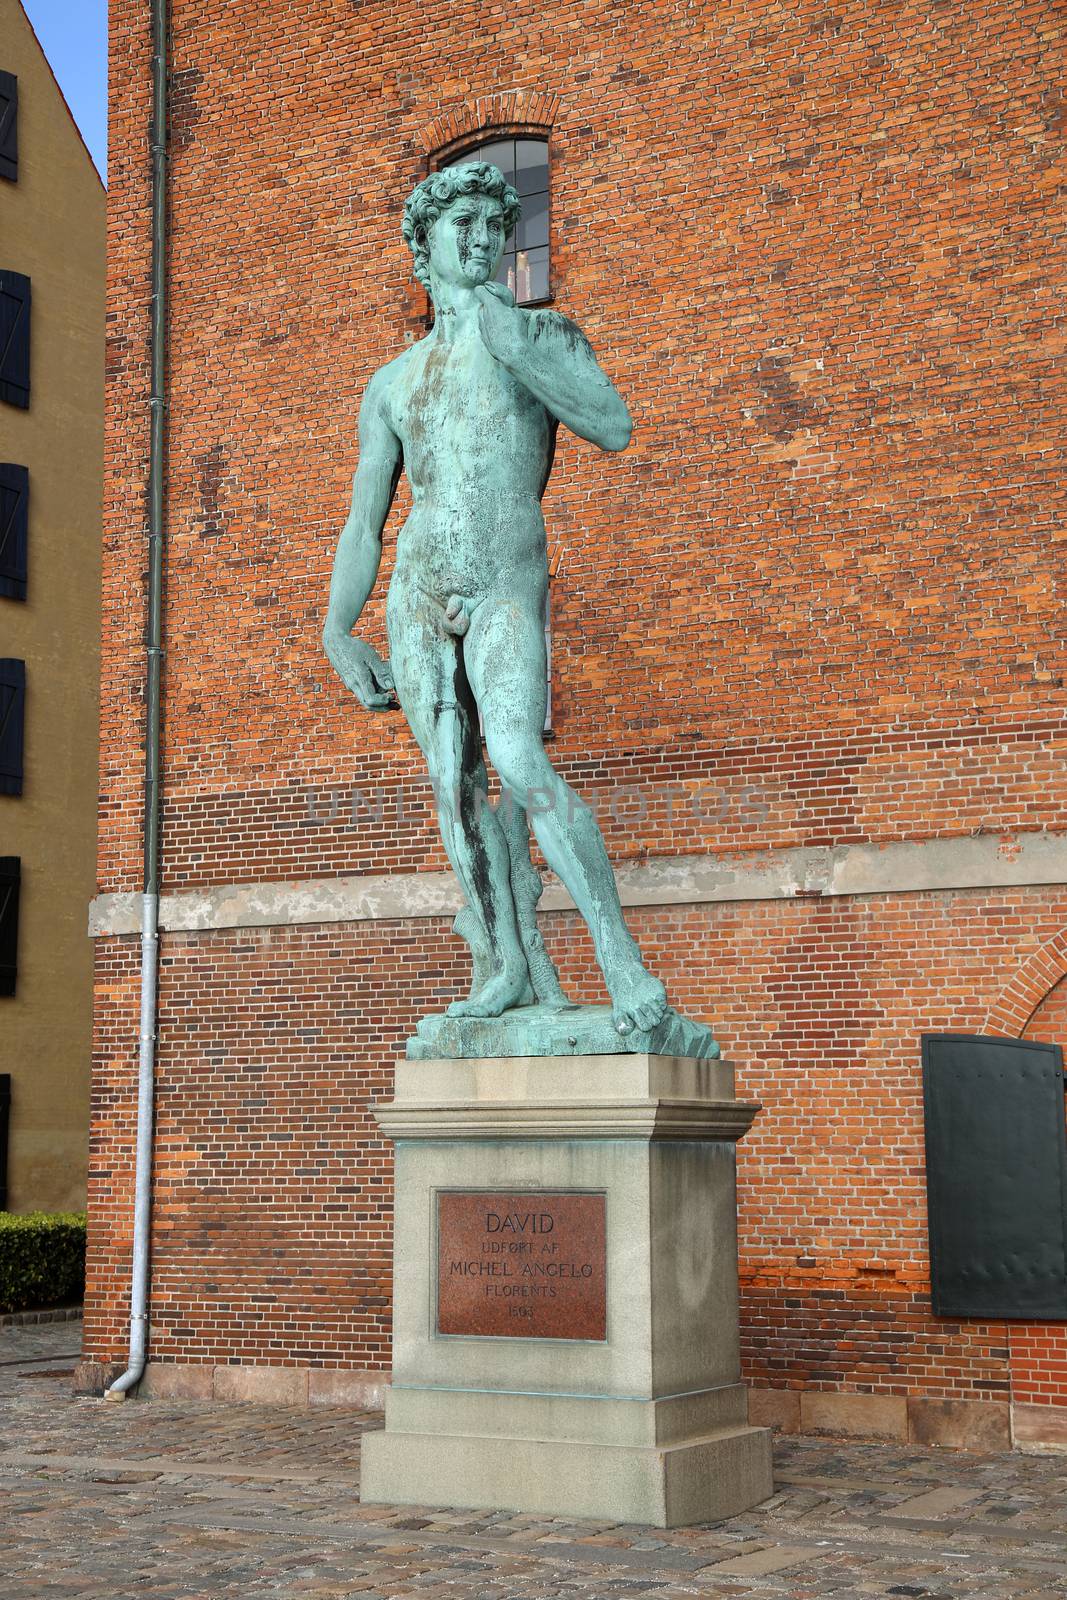 Michelangelo's David statue in Copenhagen, Denmark by vladacanon